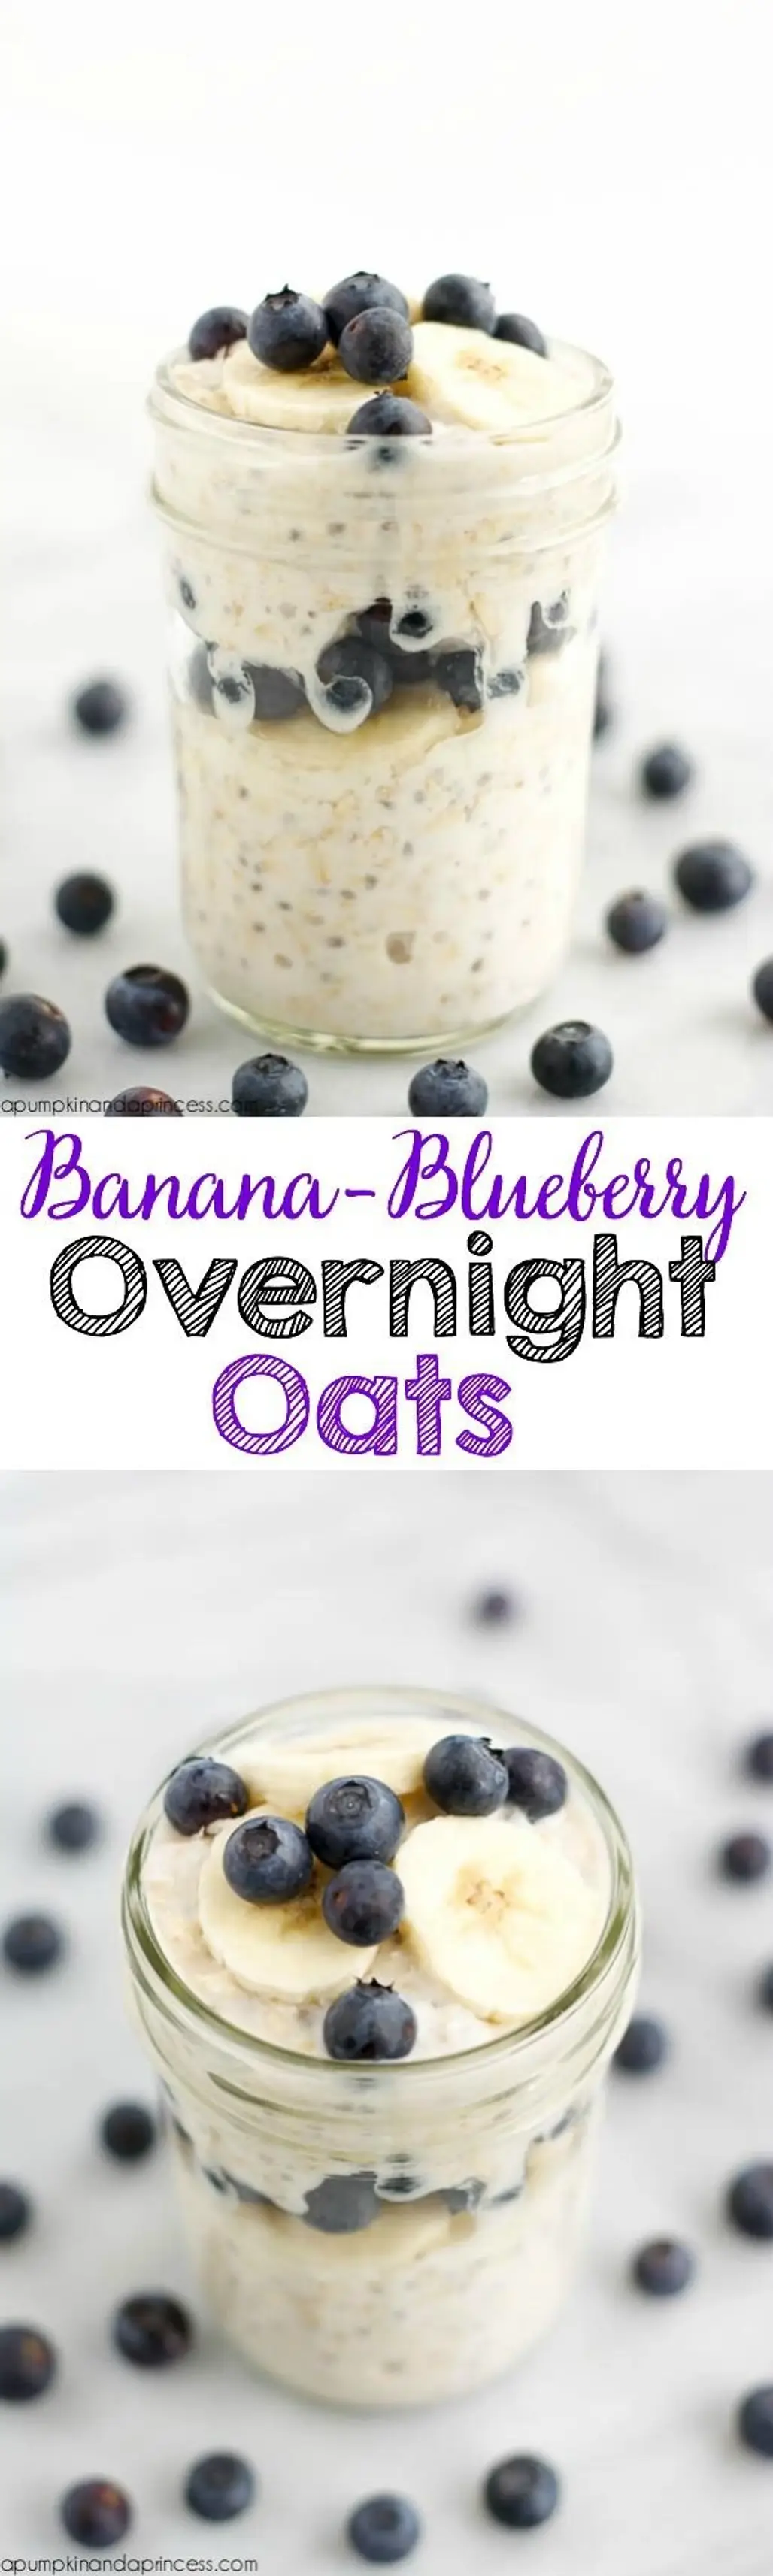 Banana-Blueberry Overnight Oats